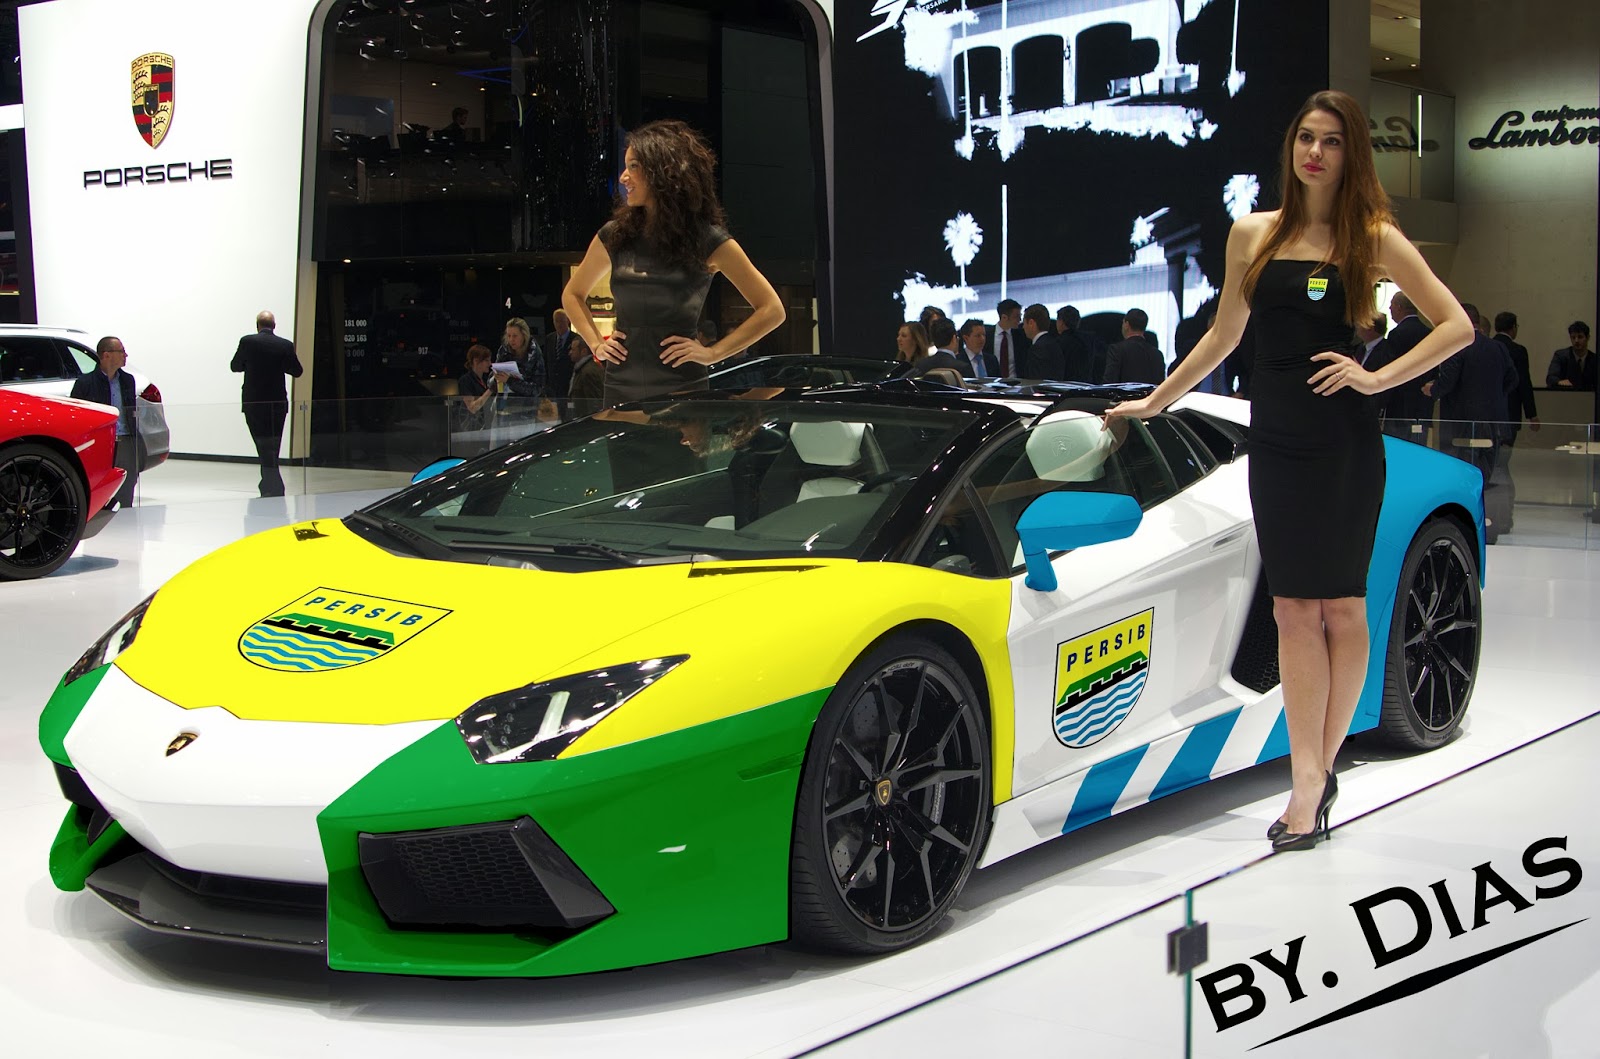 Persib - Lamborghini , HD Wallpaper & Backgrounds